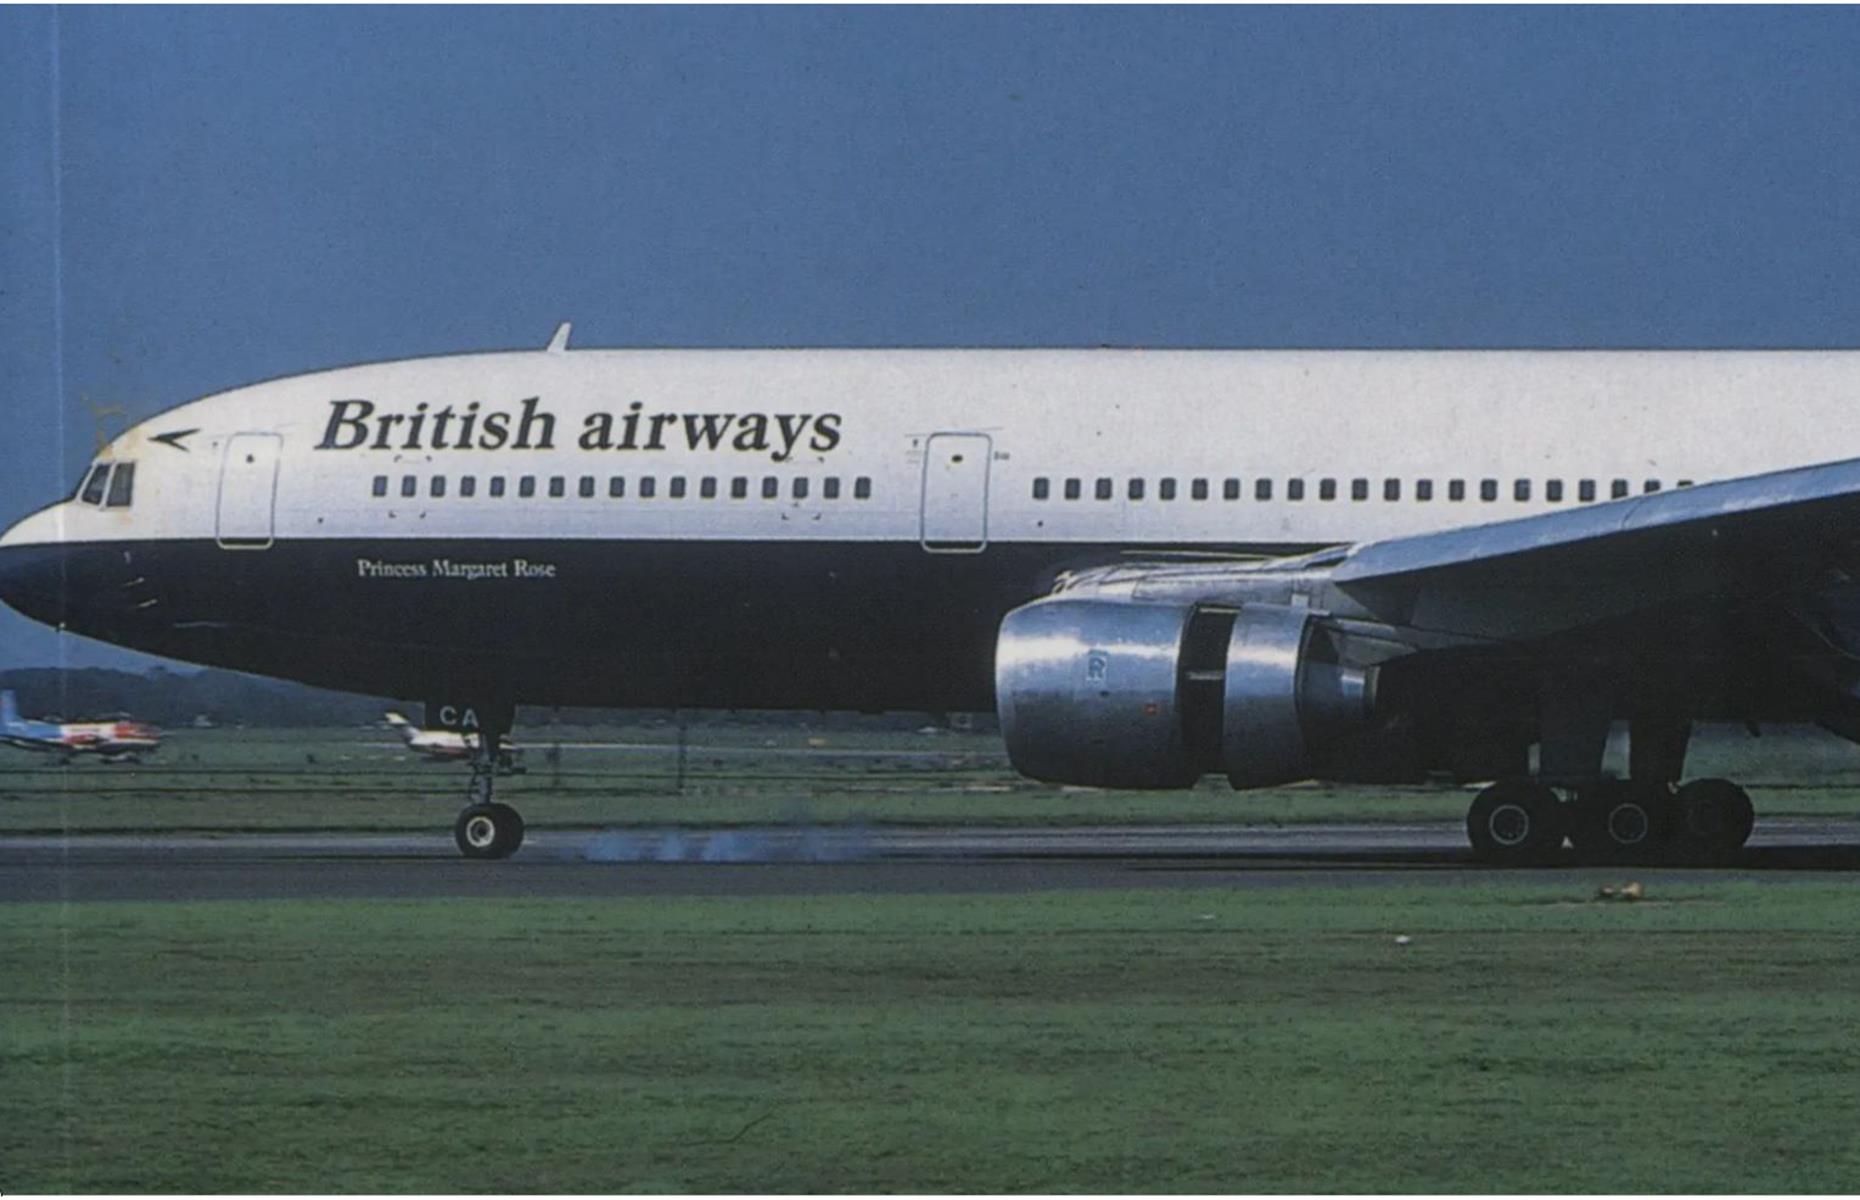 British Airways through the ages